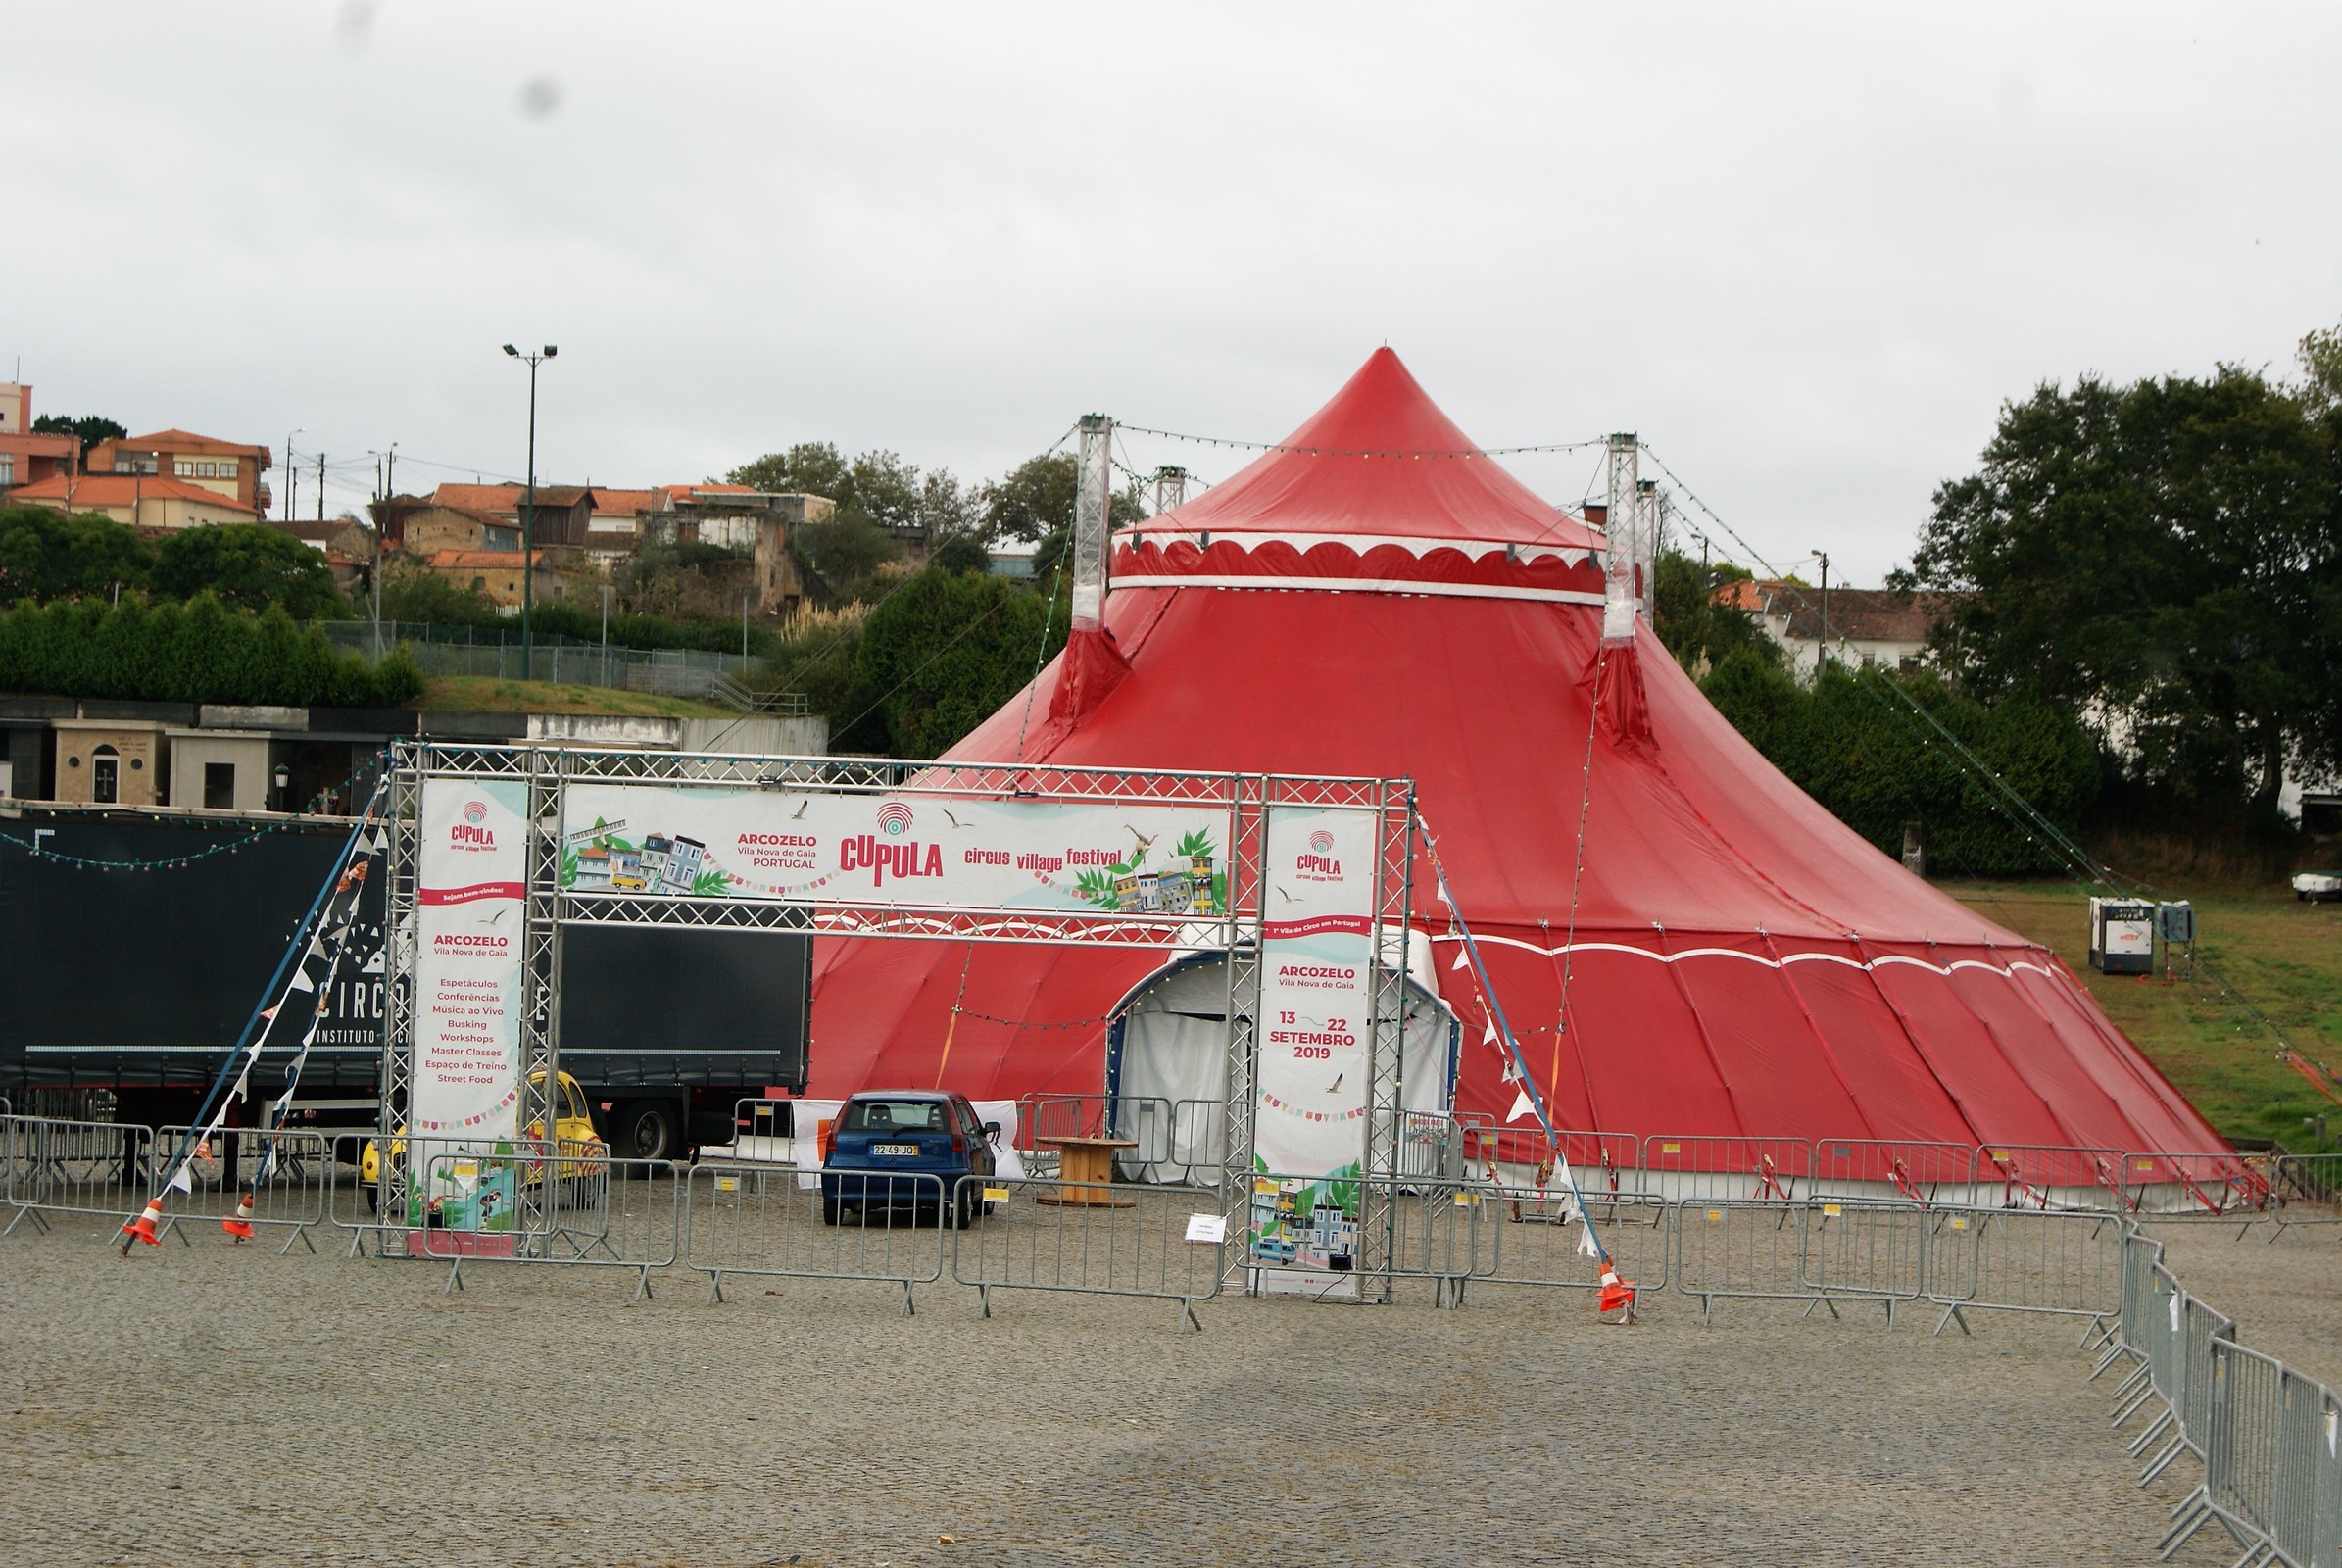 CUPULA Circus Village Festival